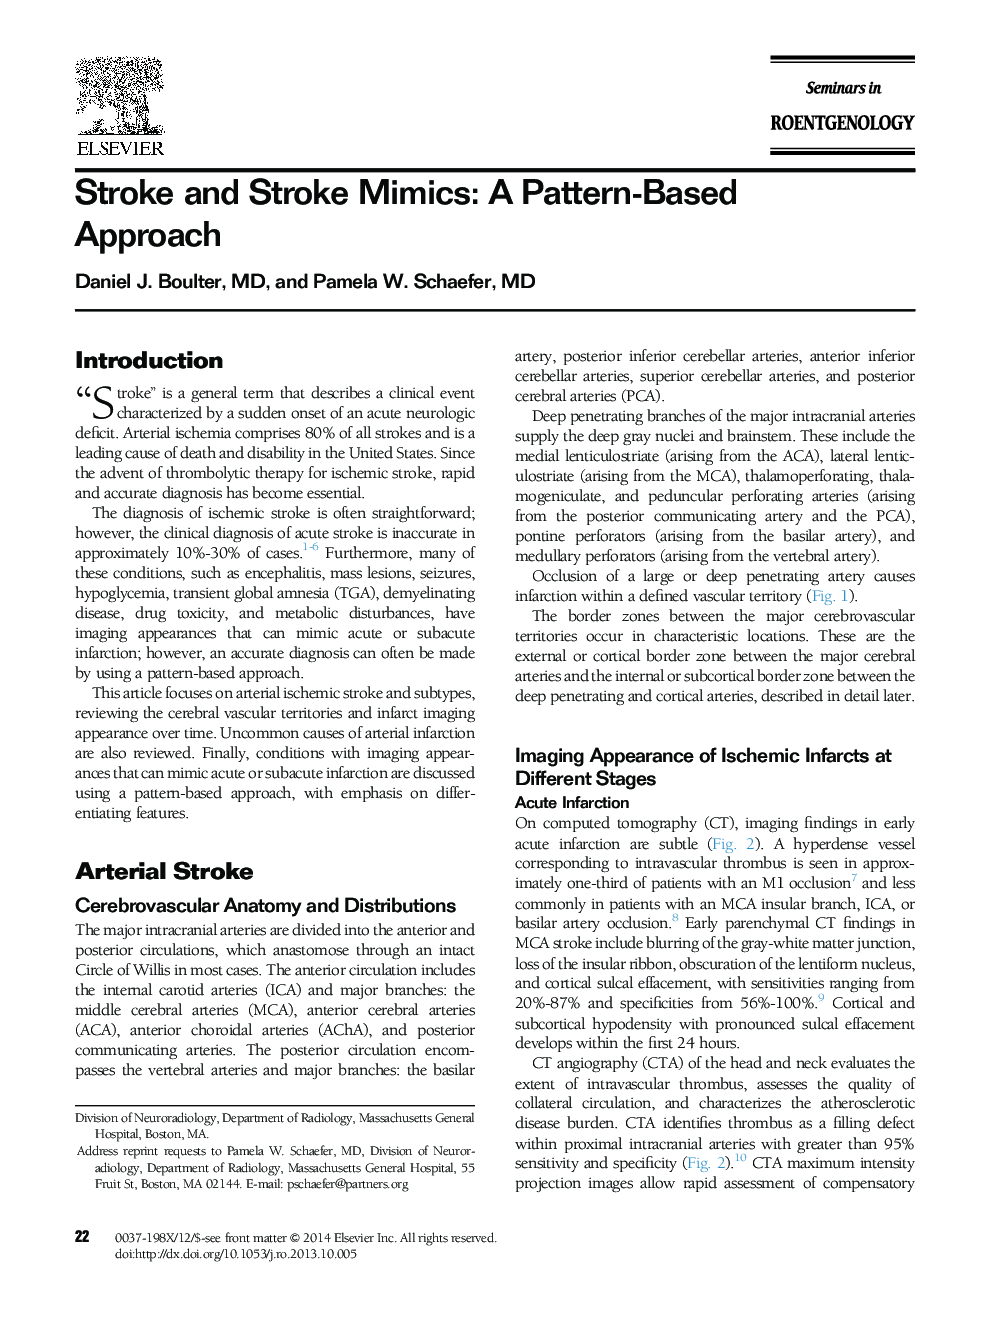 Stroke and Stroke Mimics: A Pattern-Based Approach